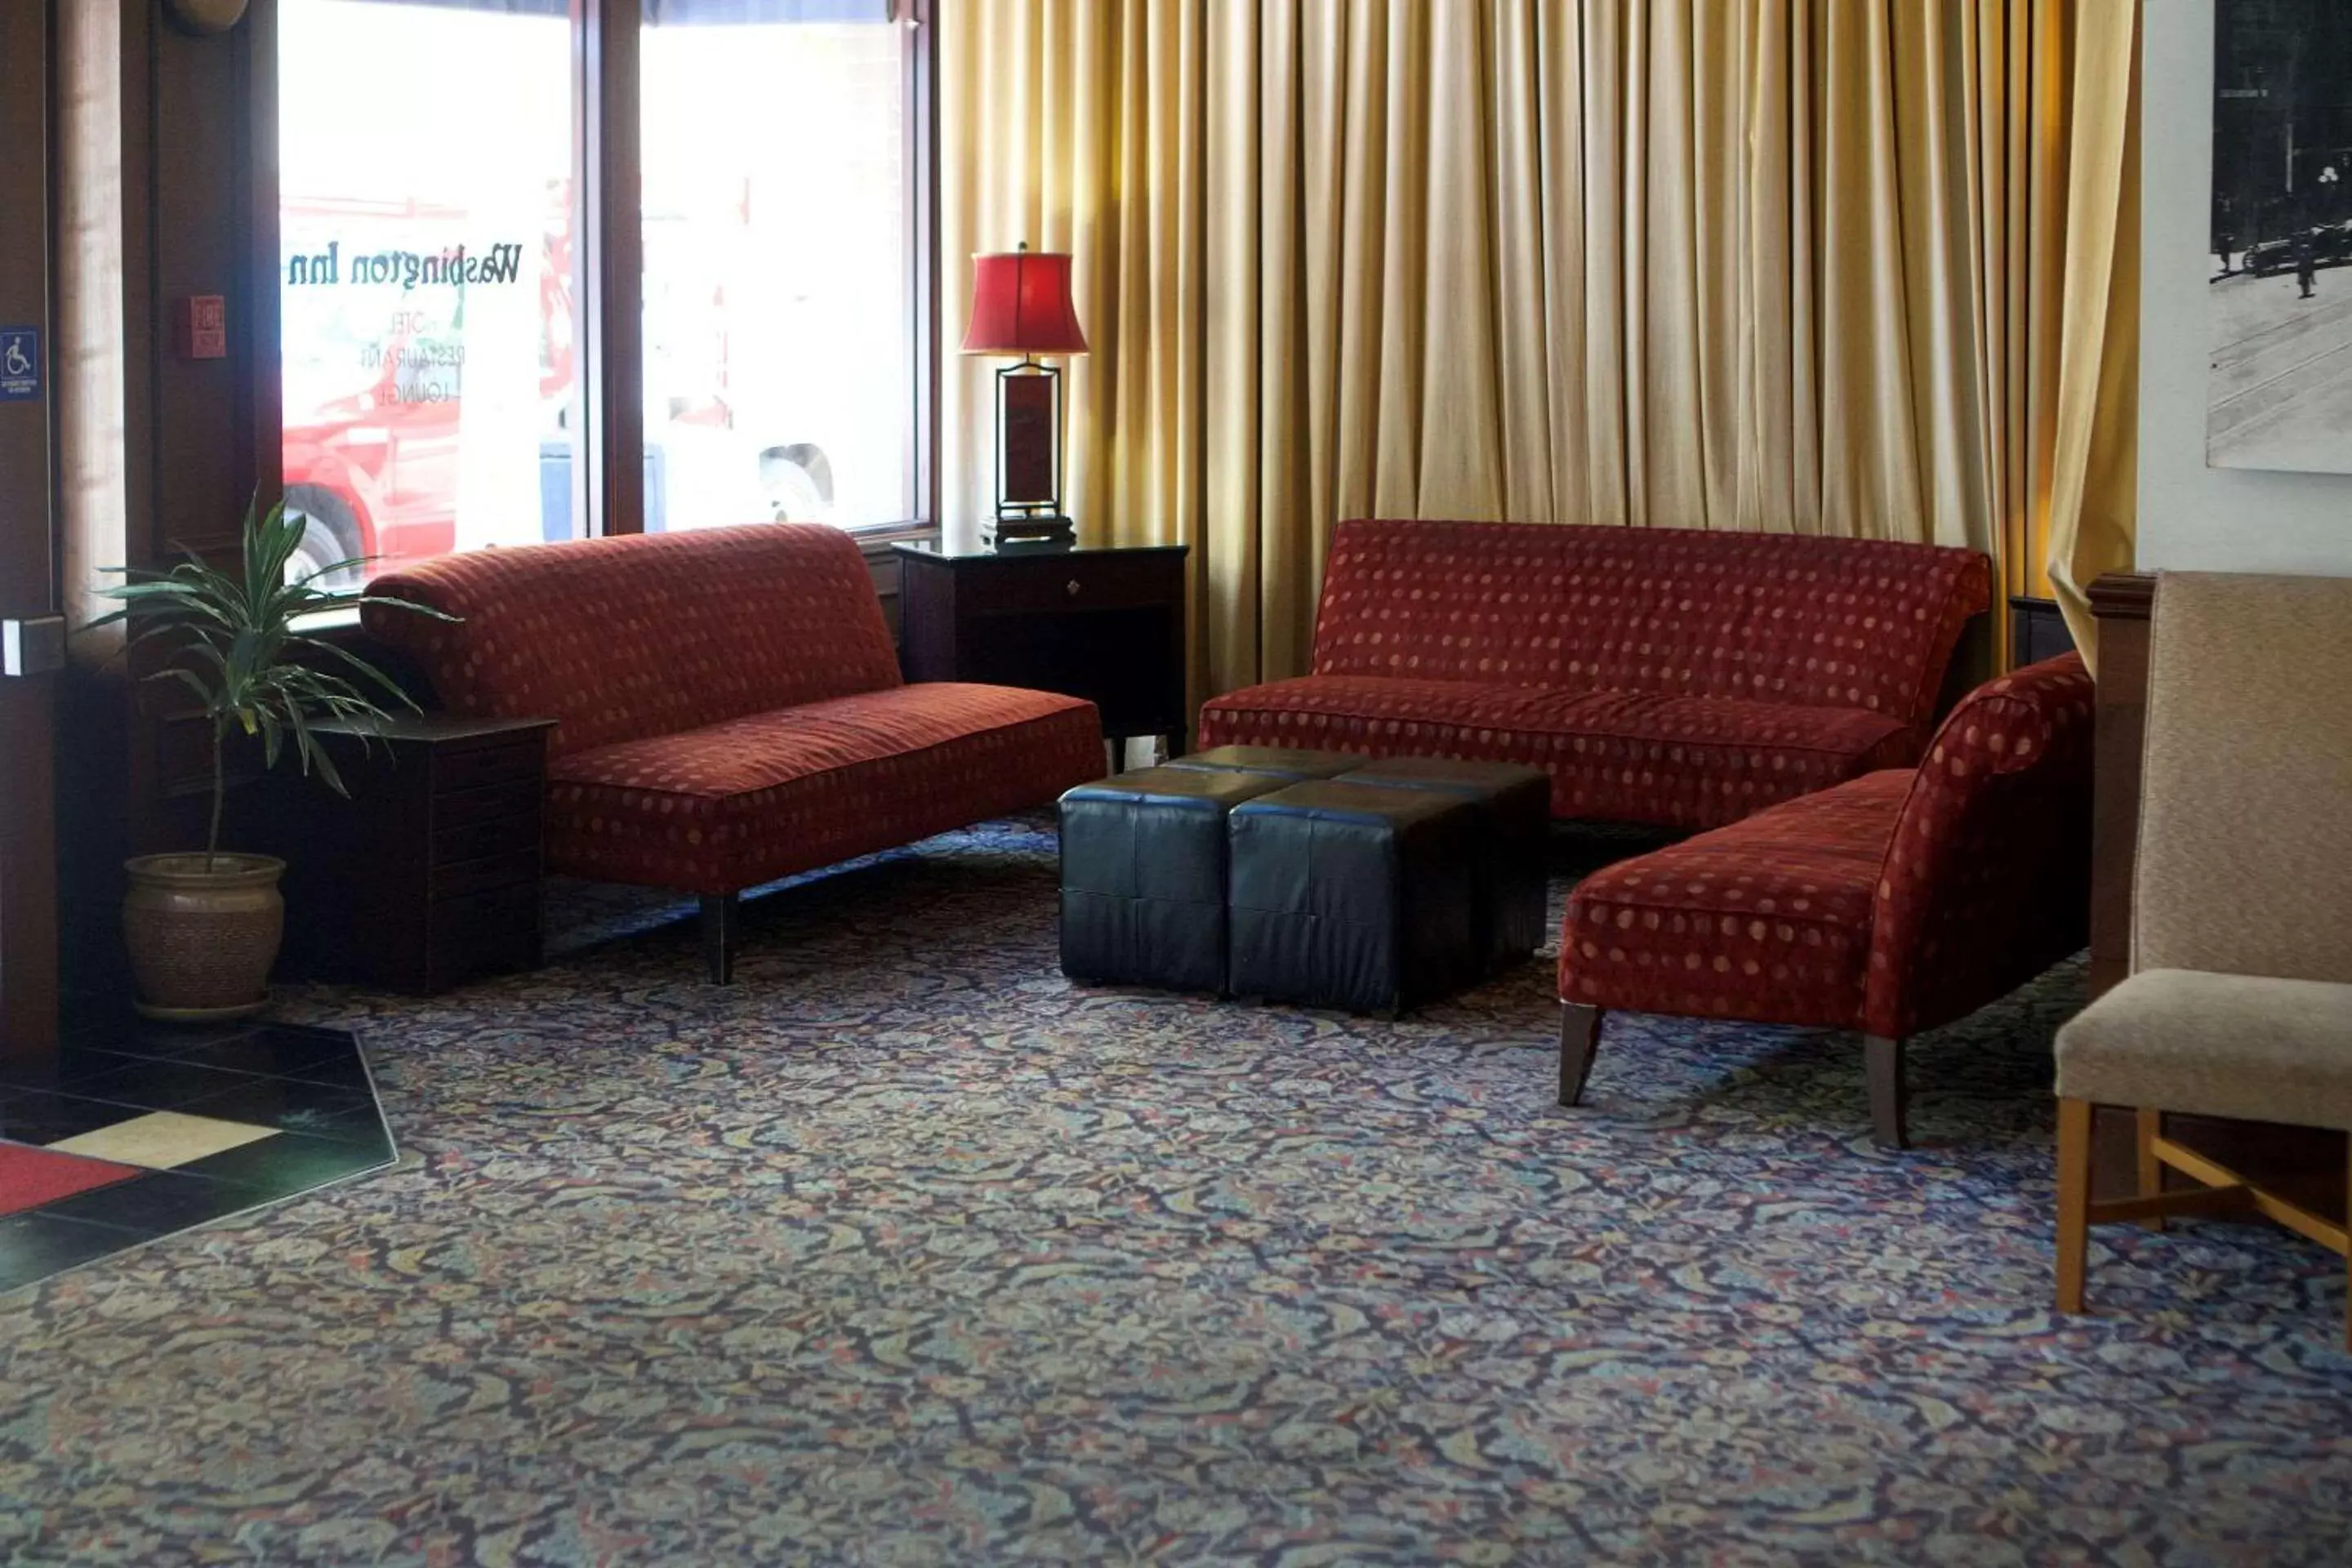 Lobby or reception, Seating Area in The Washington Inn